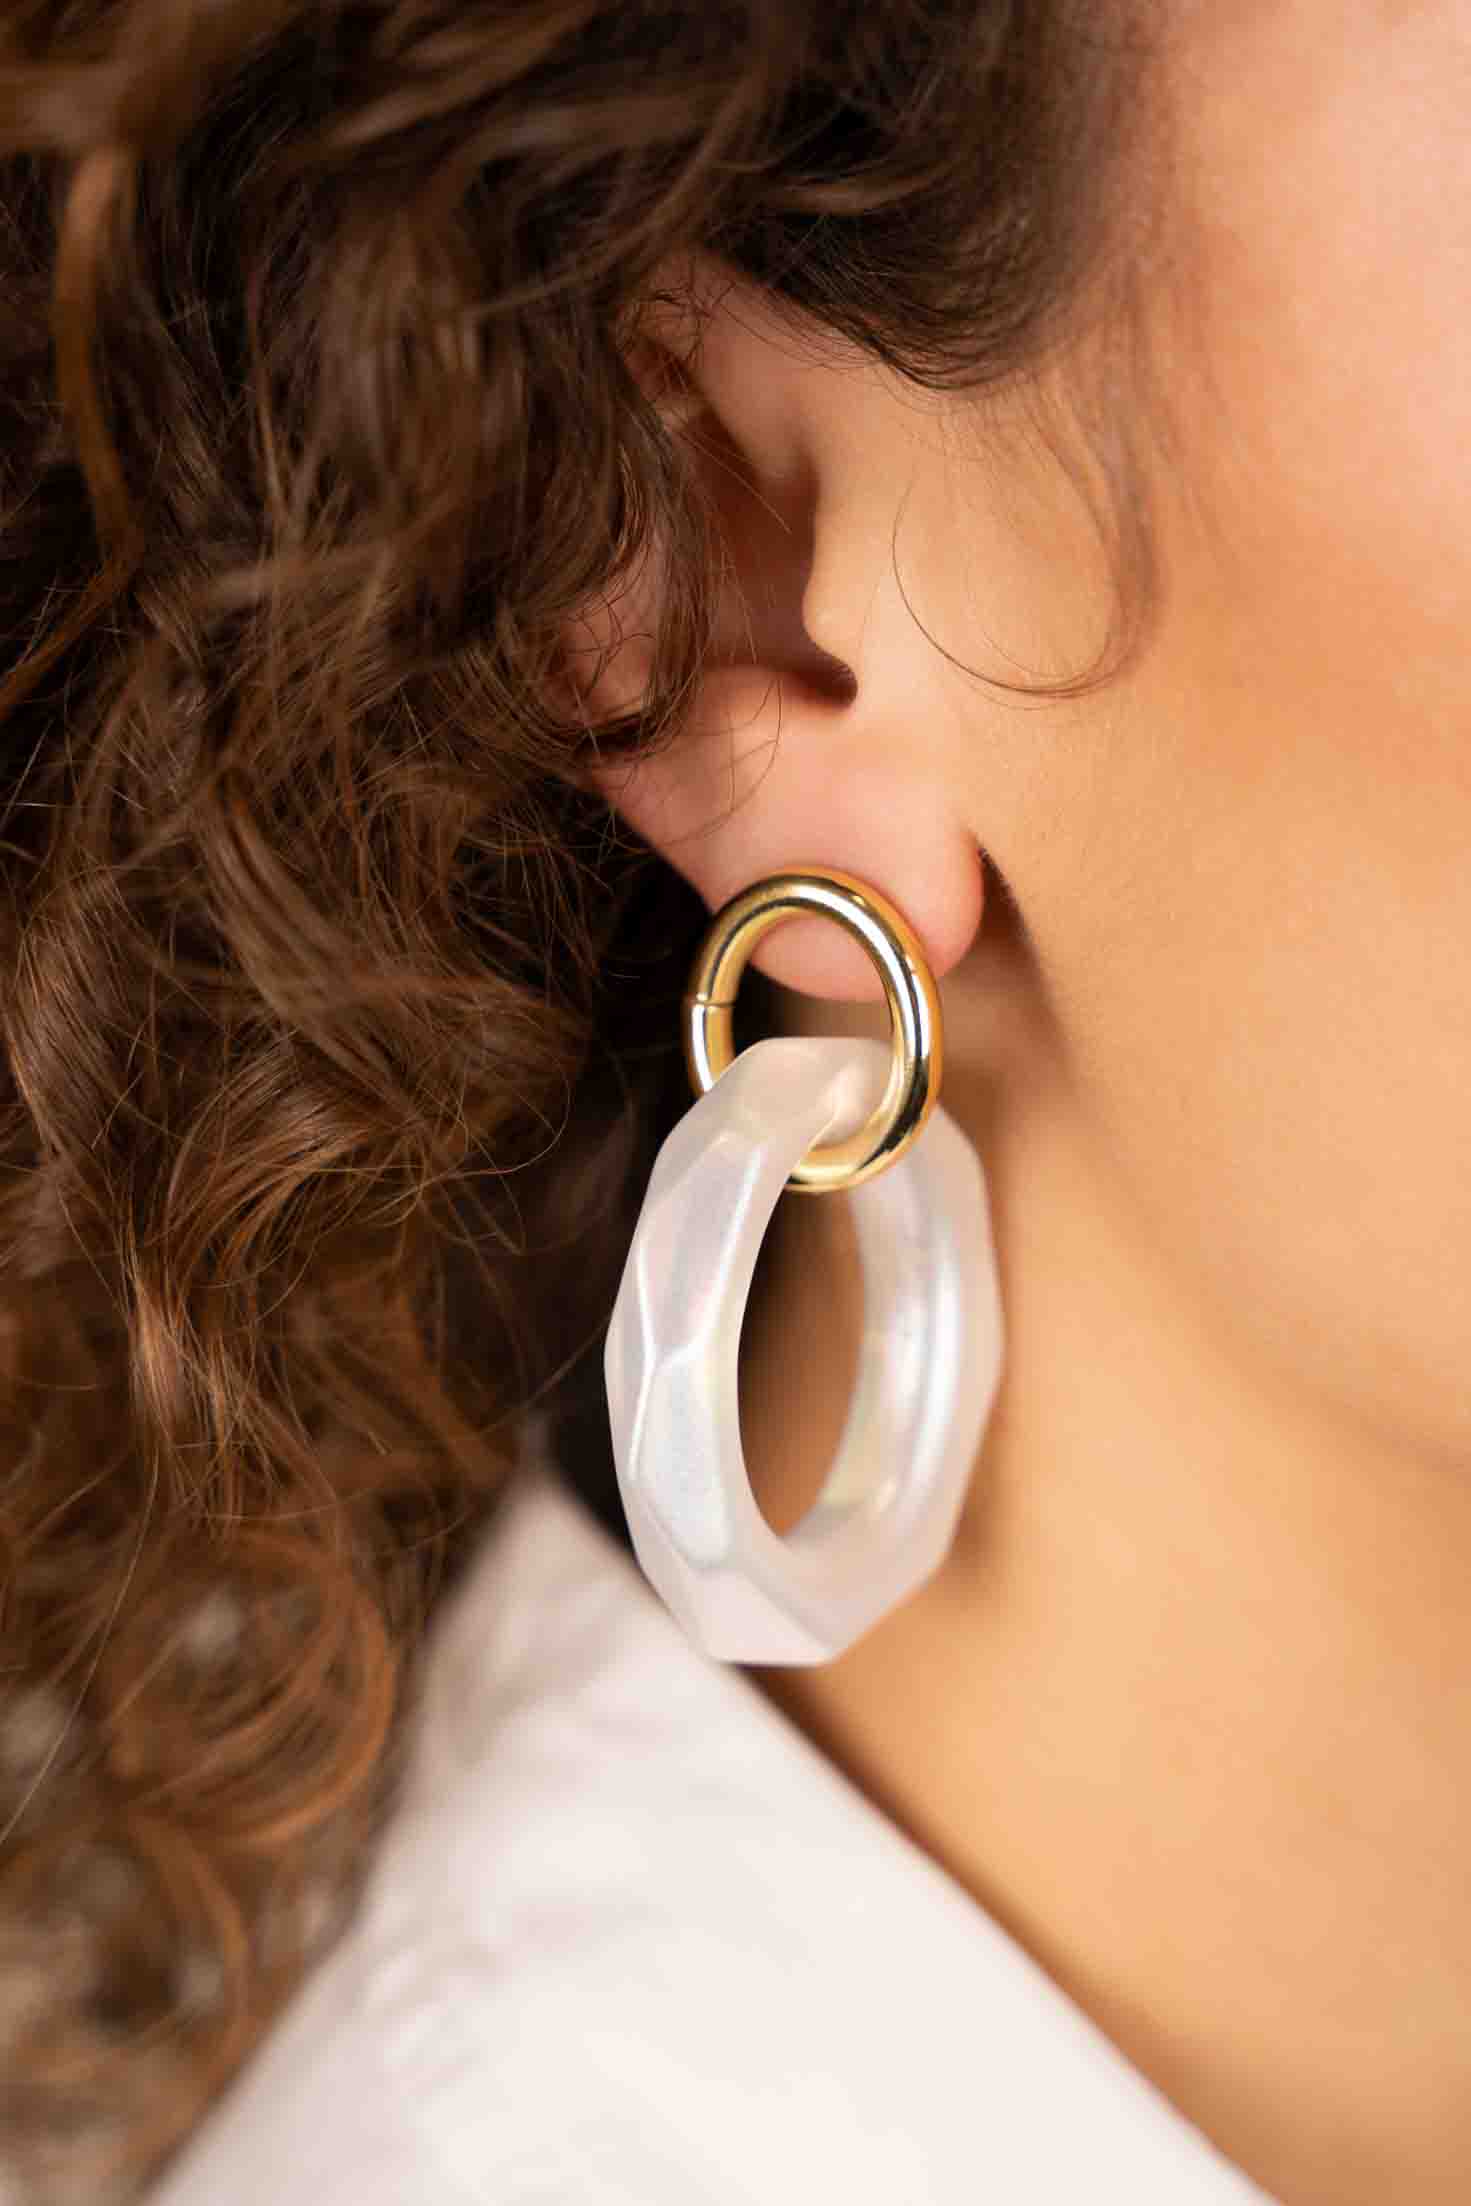 White Holo Earrings Debby Oval Llott-theme.productDescriptionPage.SEO.byTheBrand